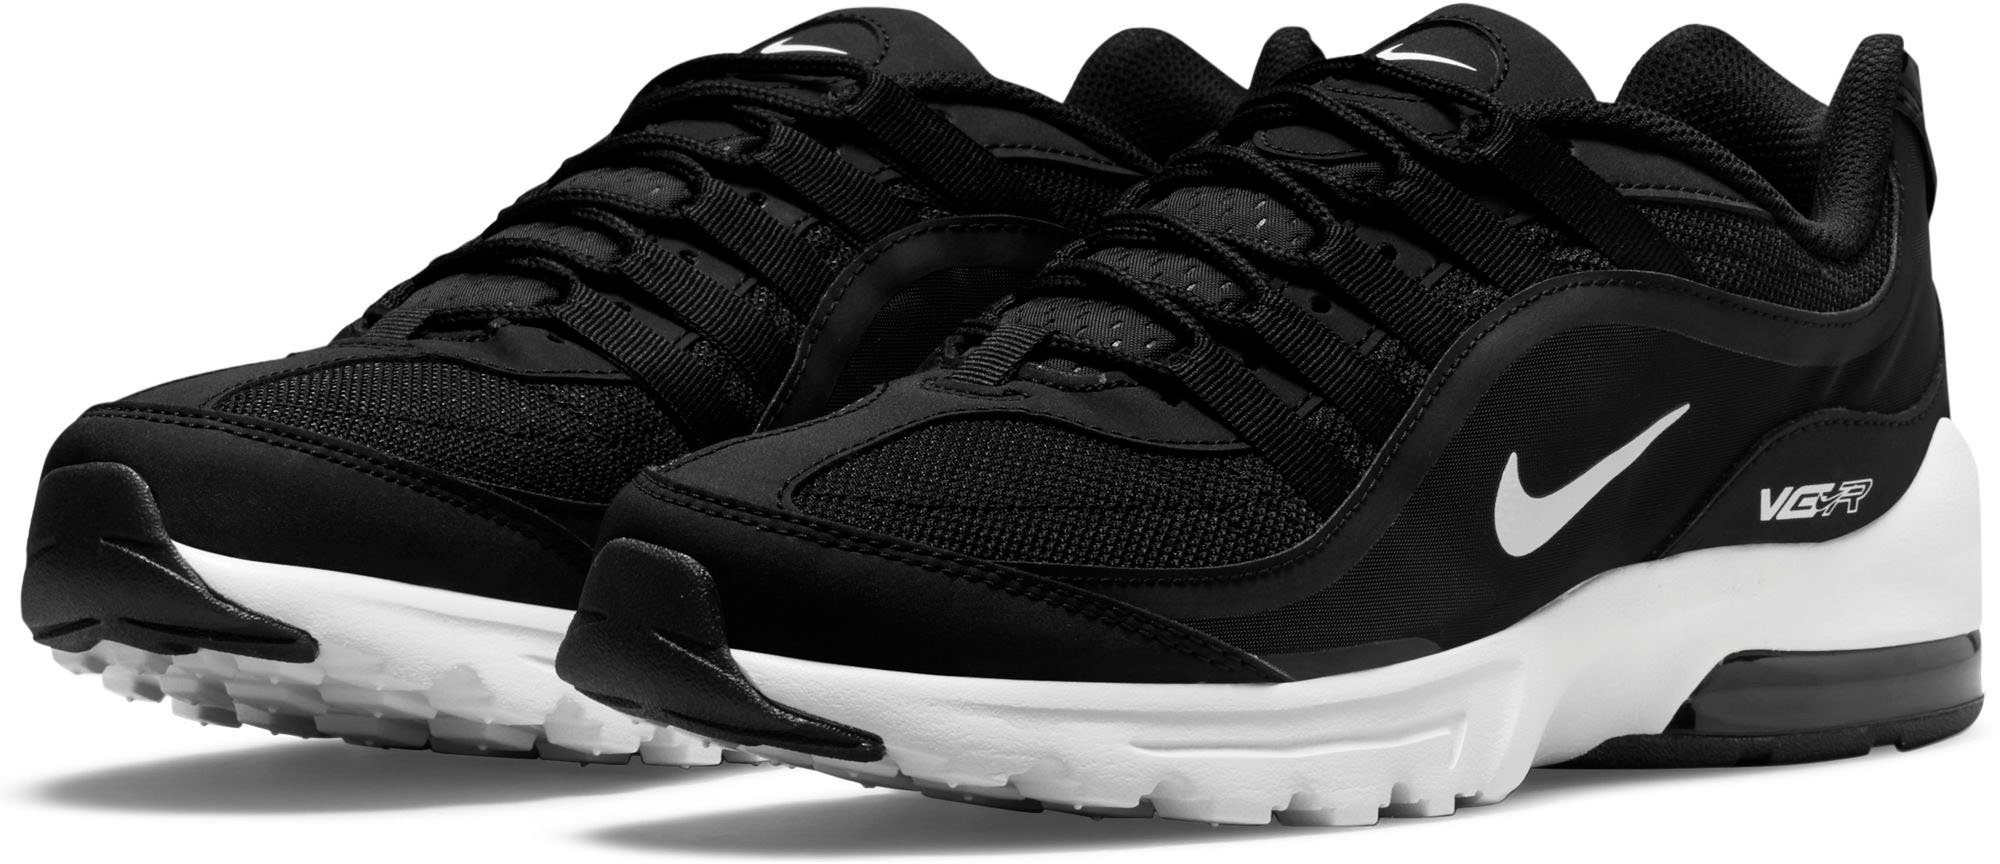 Nike Sportswear »AIR MAX VG-R« Sneaker online kaufen | OTTO